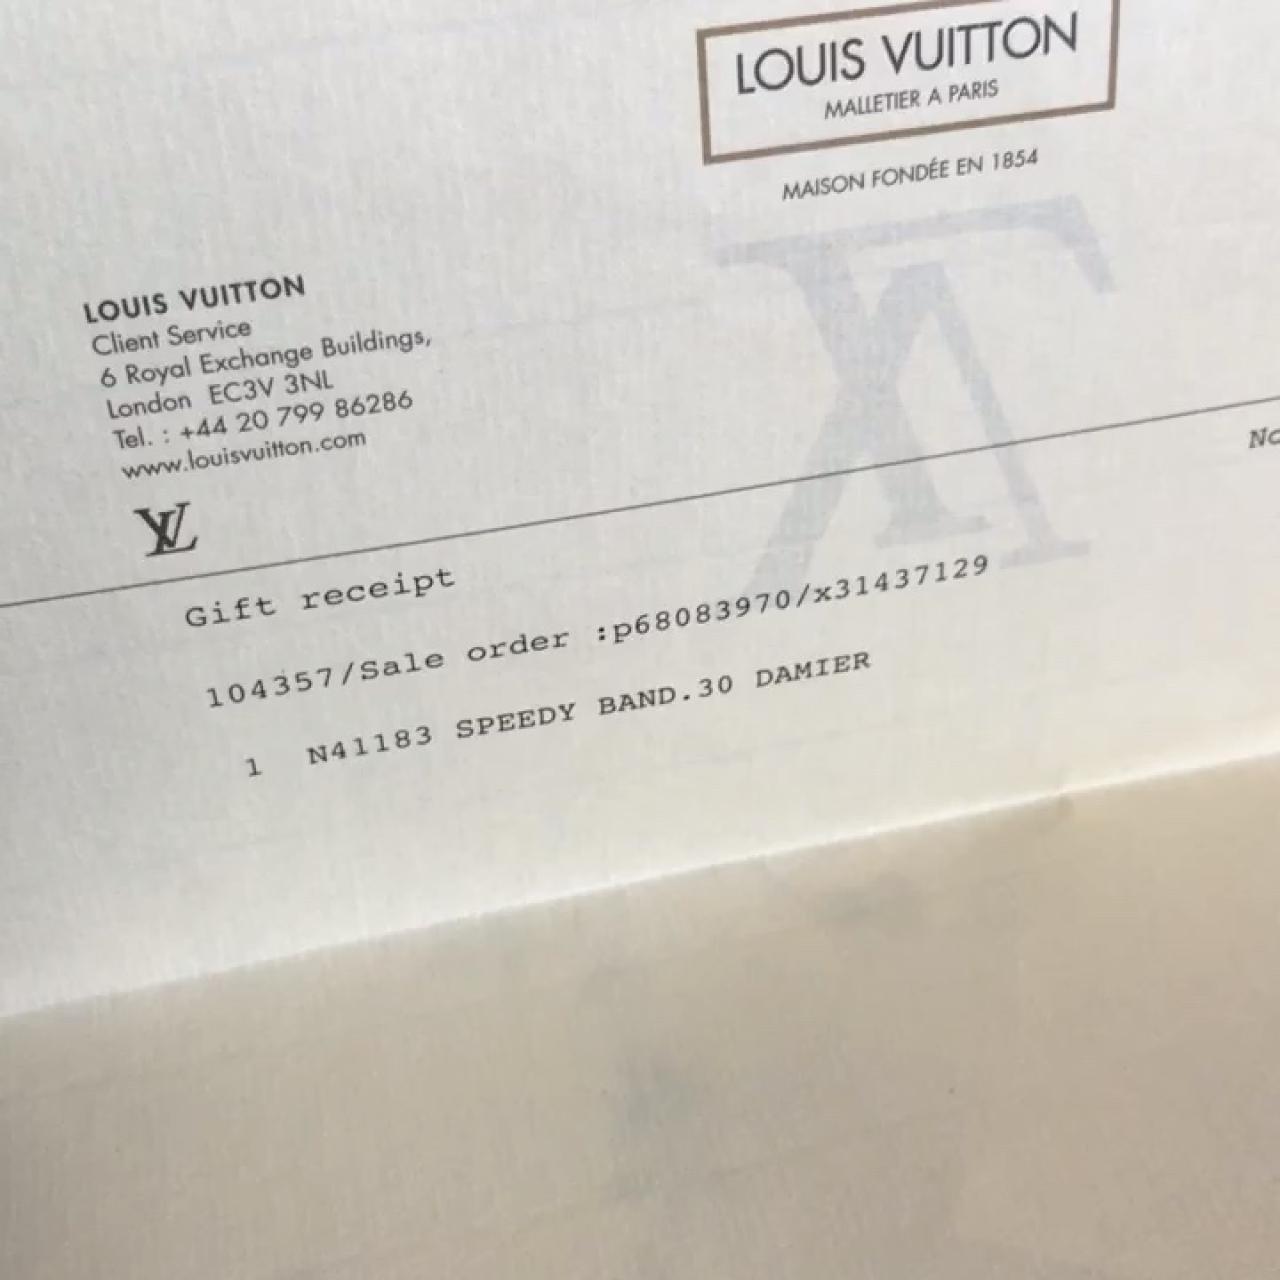 LV invoice - Depop